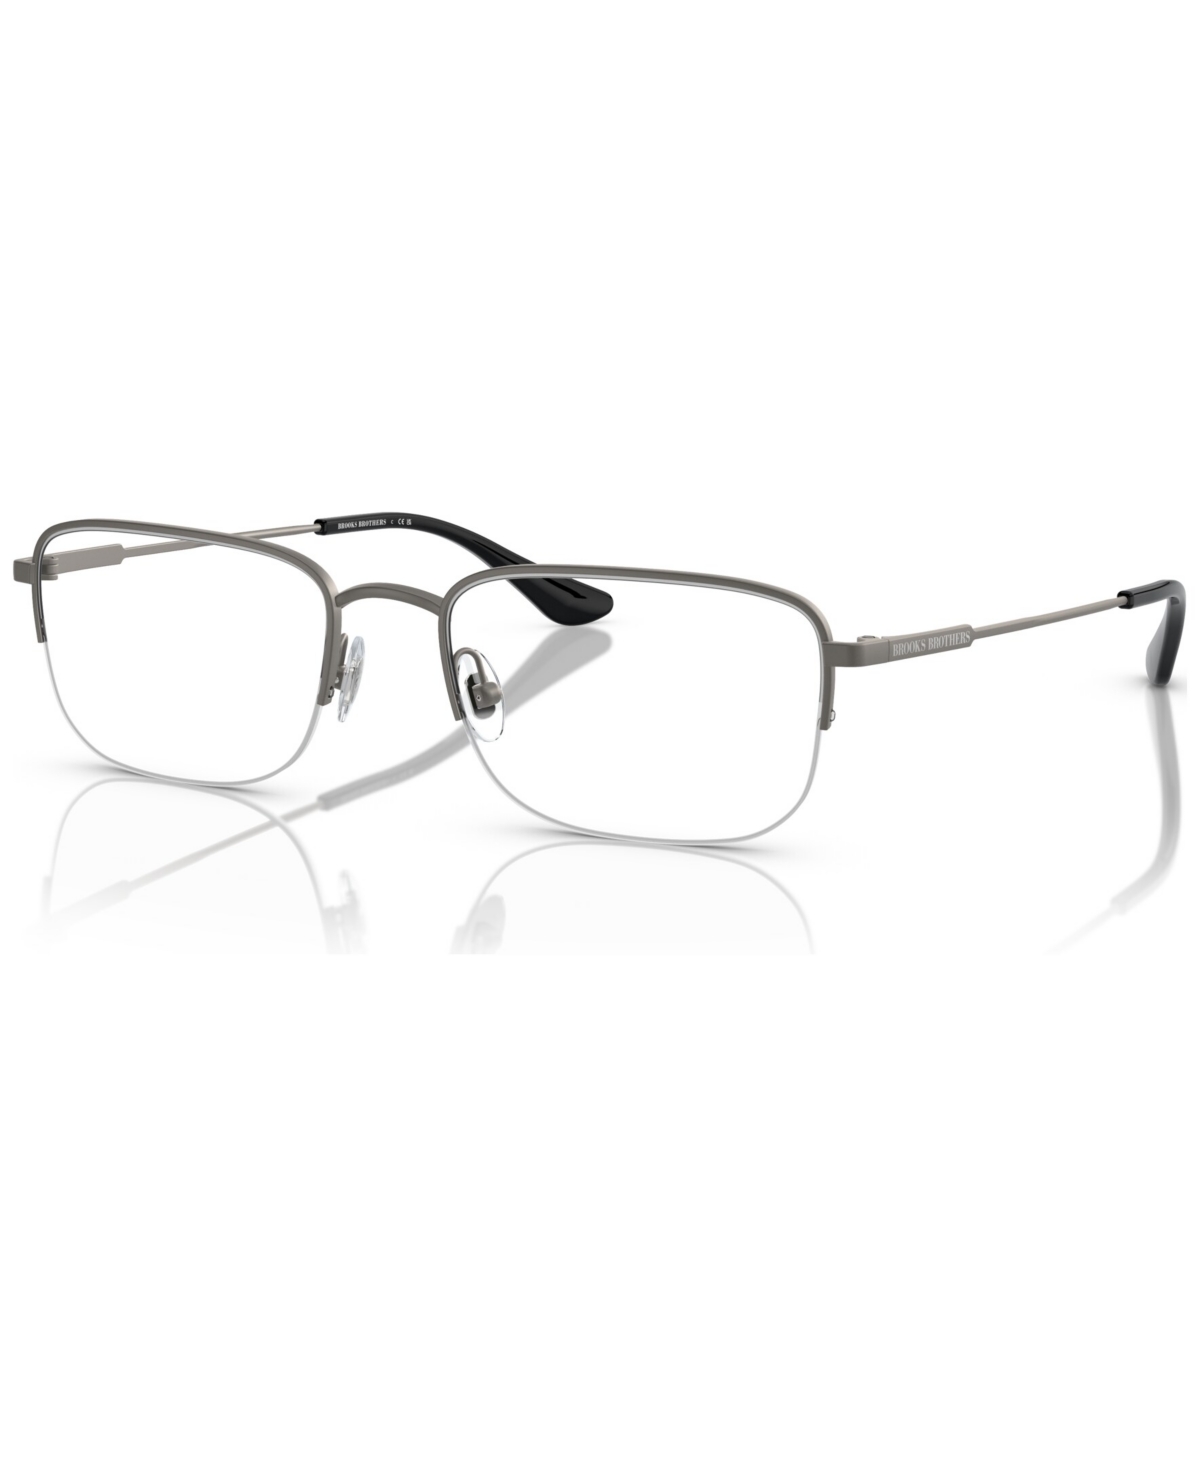 Men's Eyeglasses, BB1109 55 - Matte Gunmetal